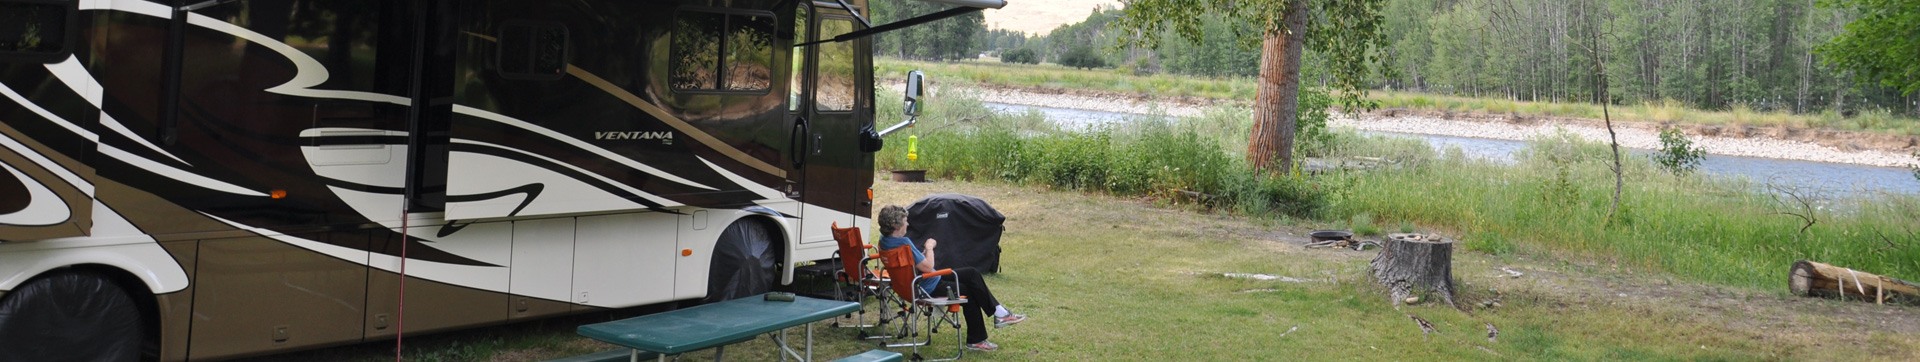 methow-river-camping